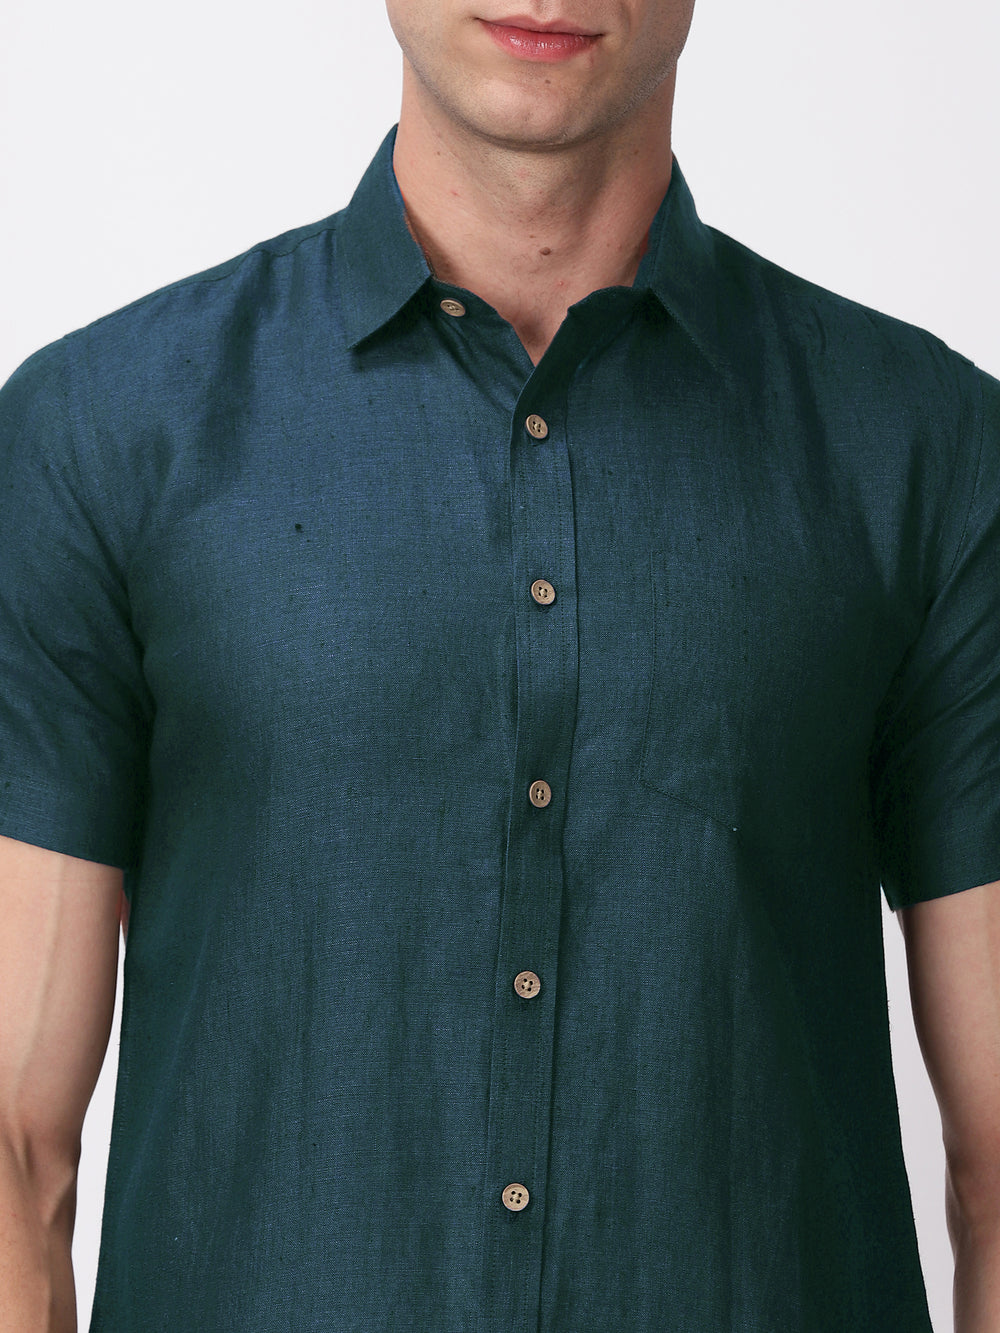 Harvey - Pure Linen Half Sleeve Shirt - Midnight Blue